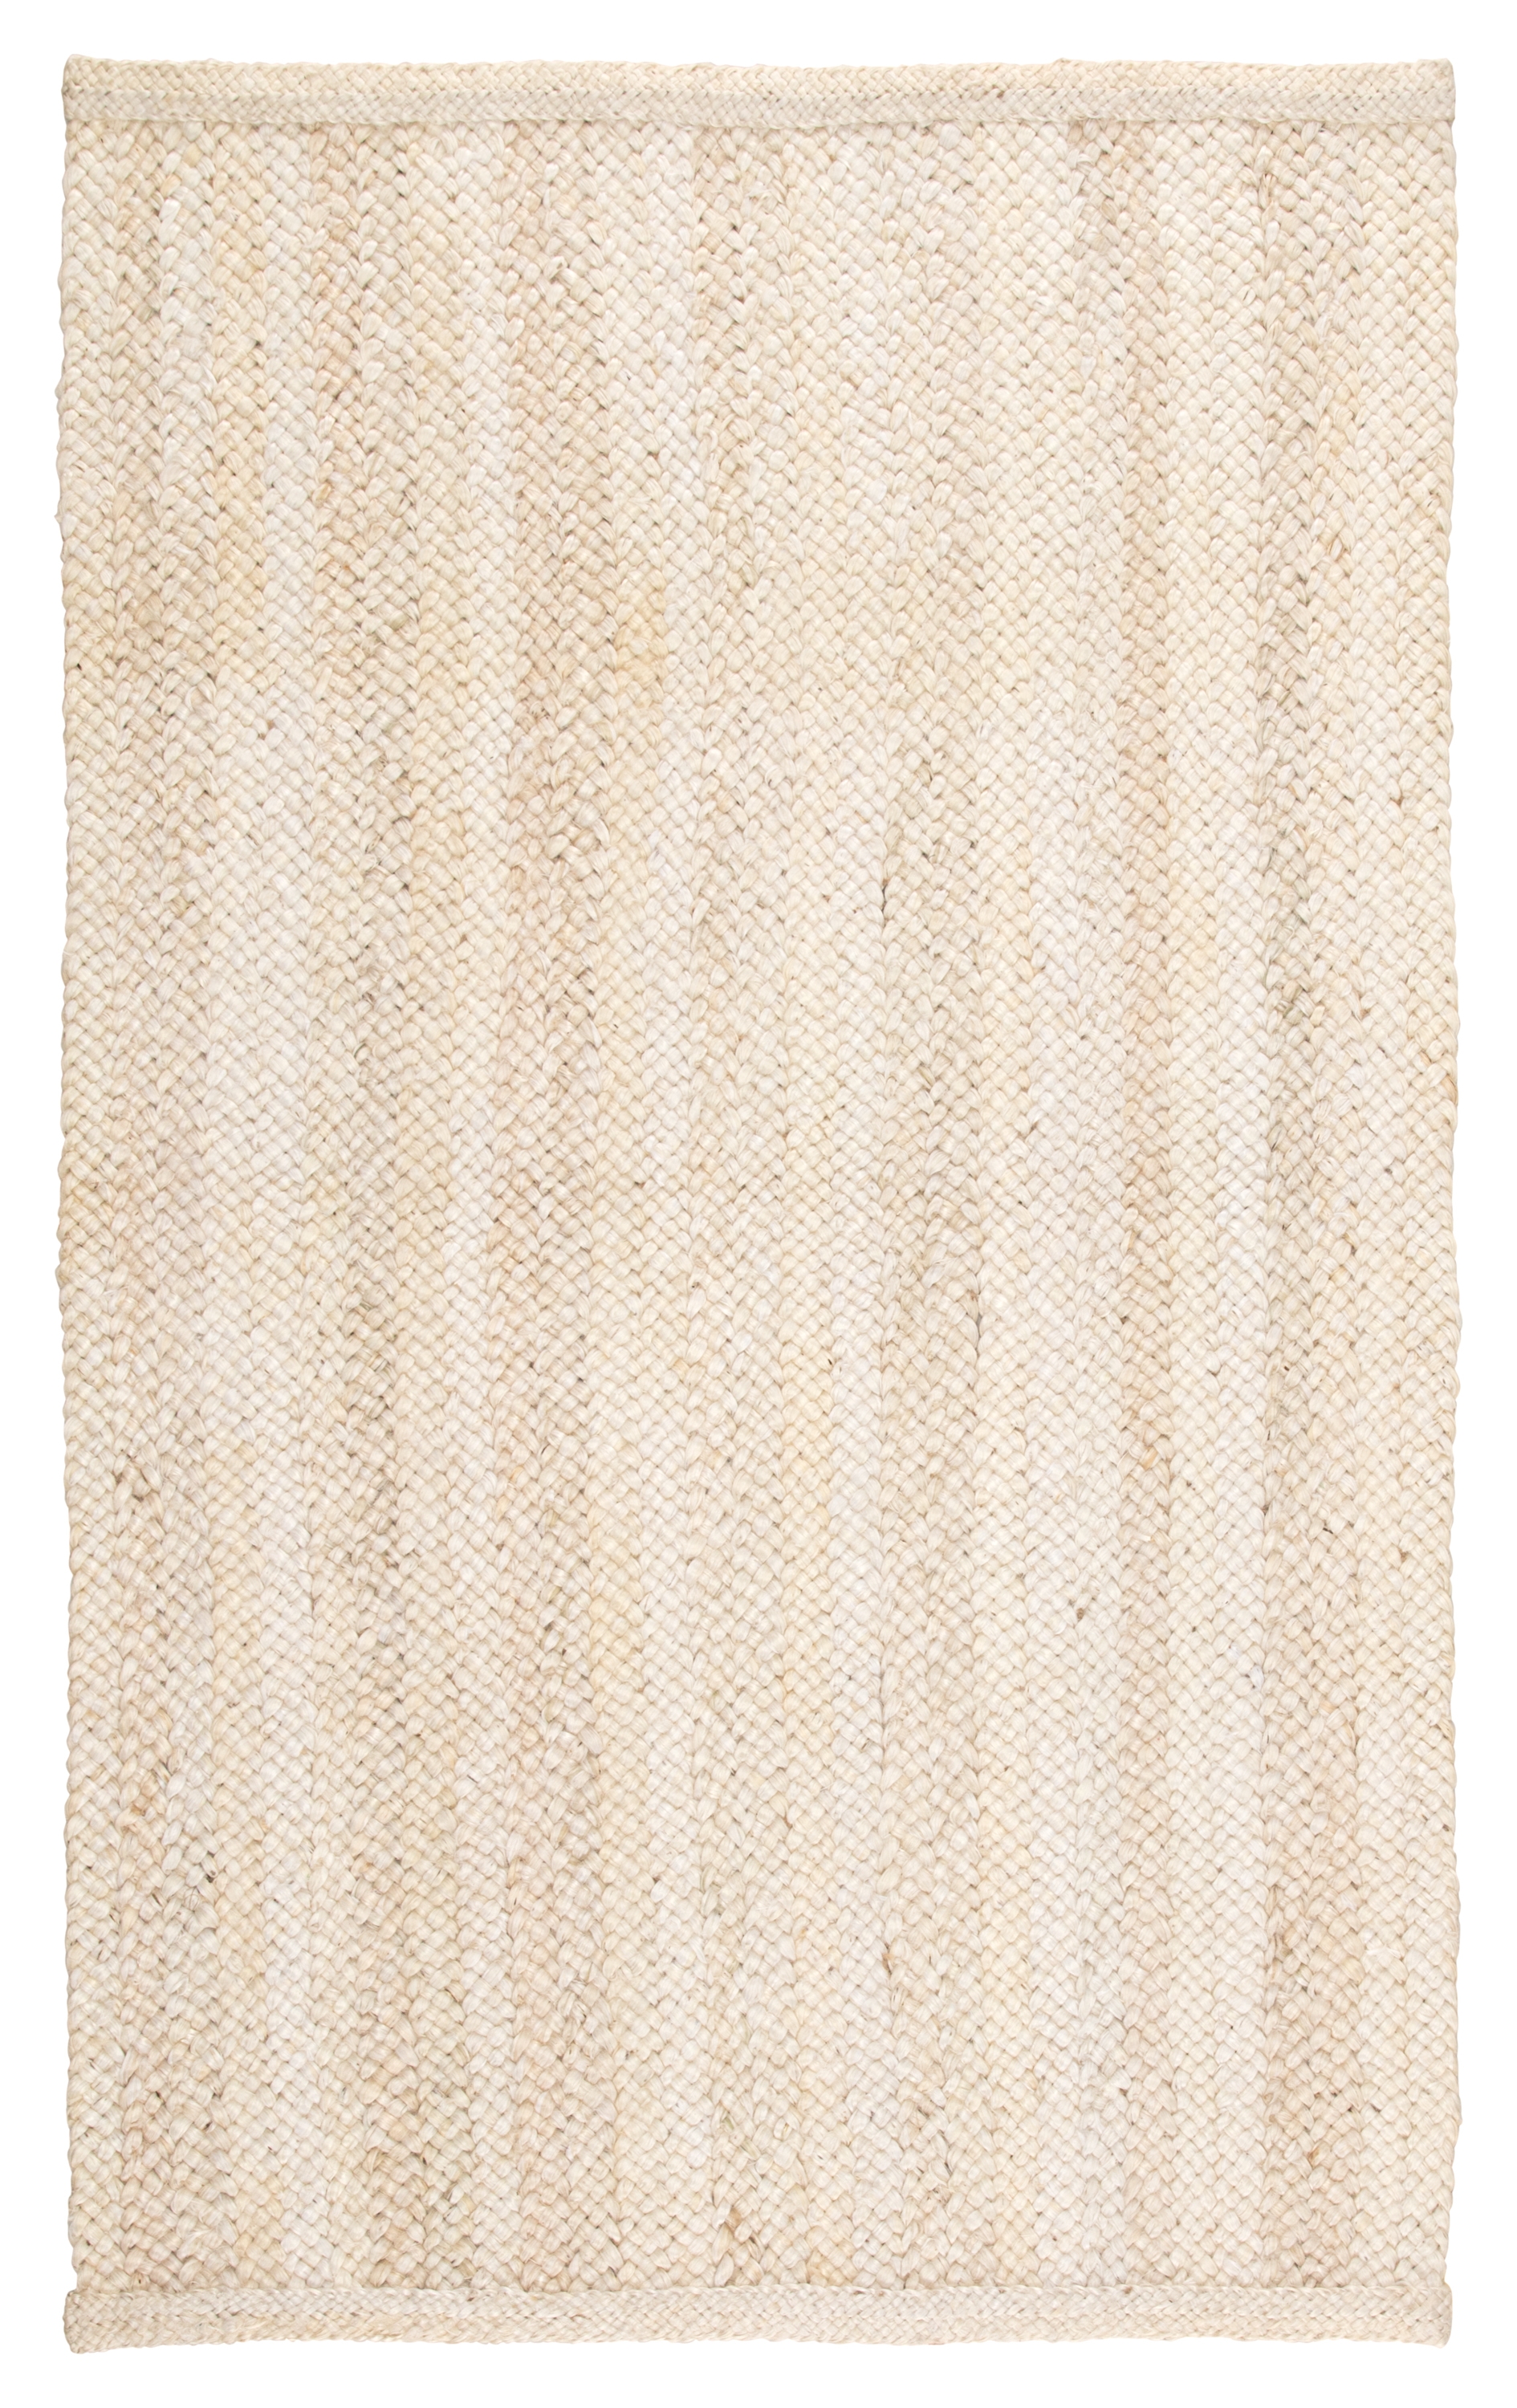 Anichini Natural Solid Ivory/ Beige Area Rug (4'X6') - Image 0